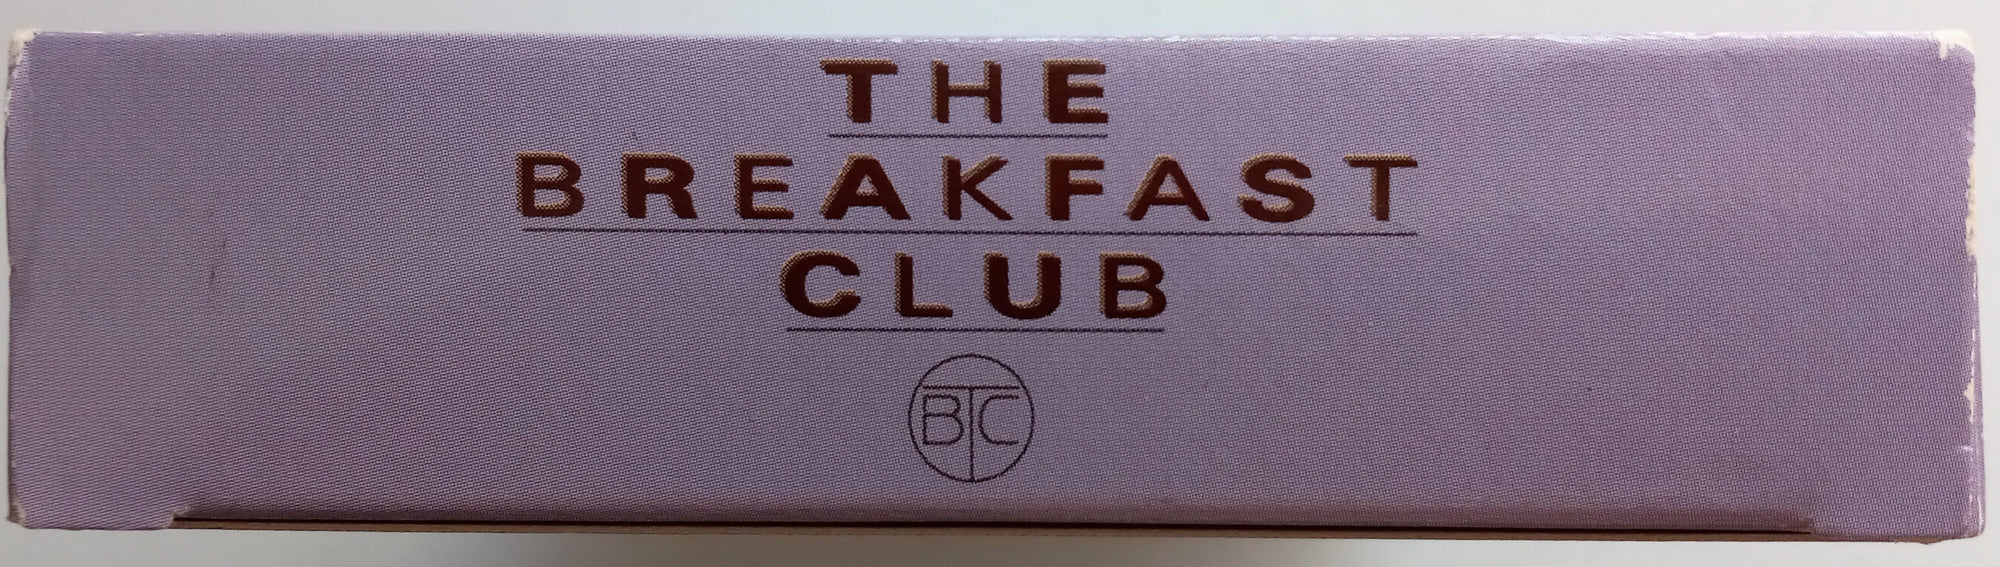 Breakfast-Club-VHS